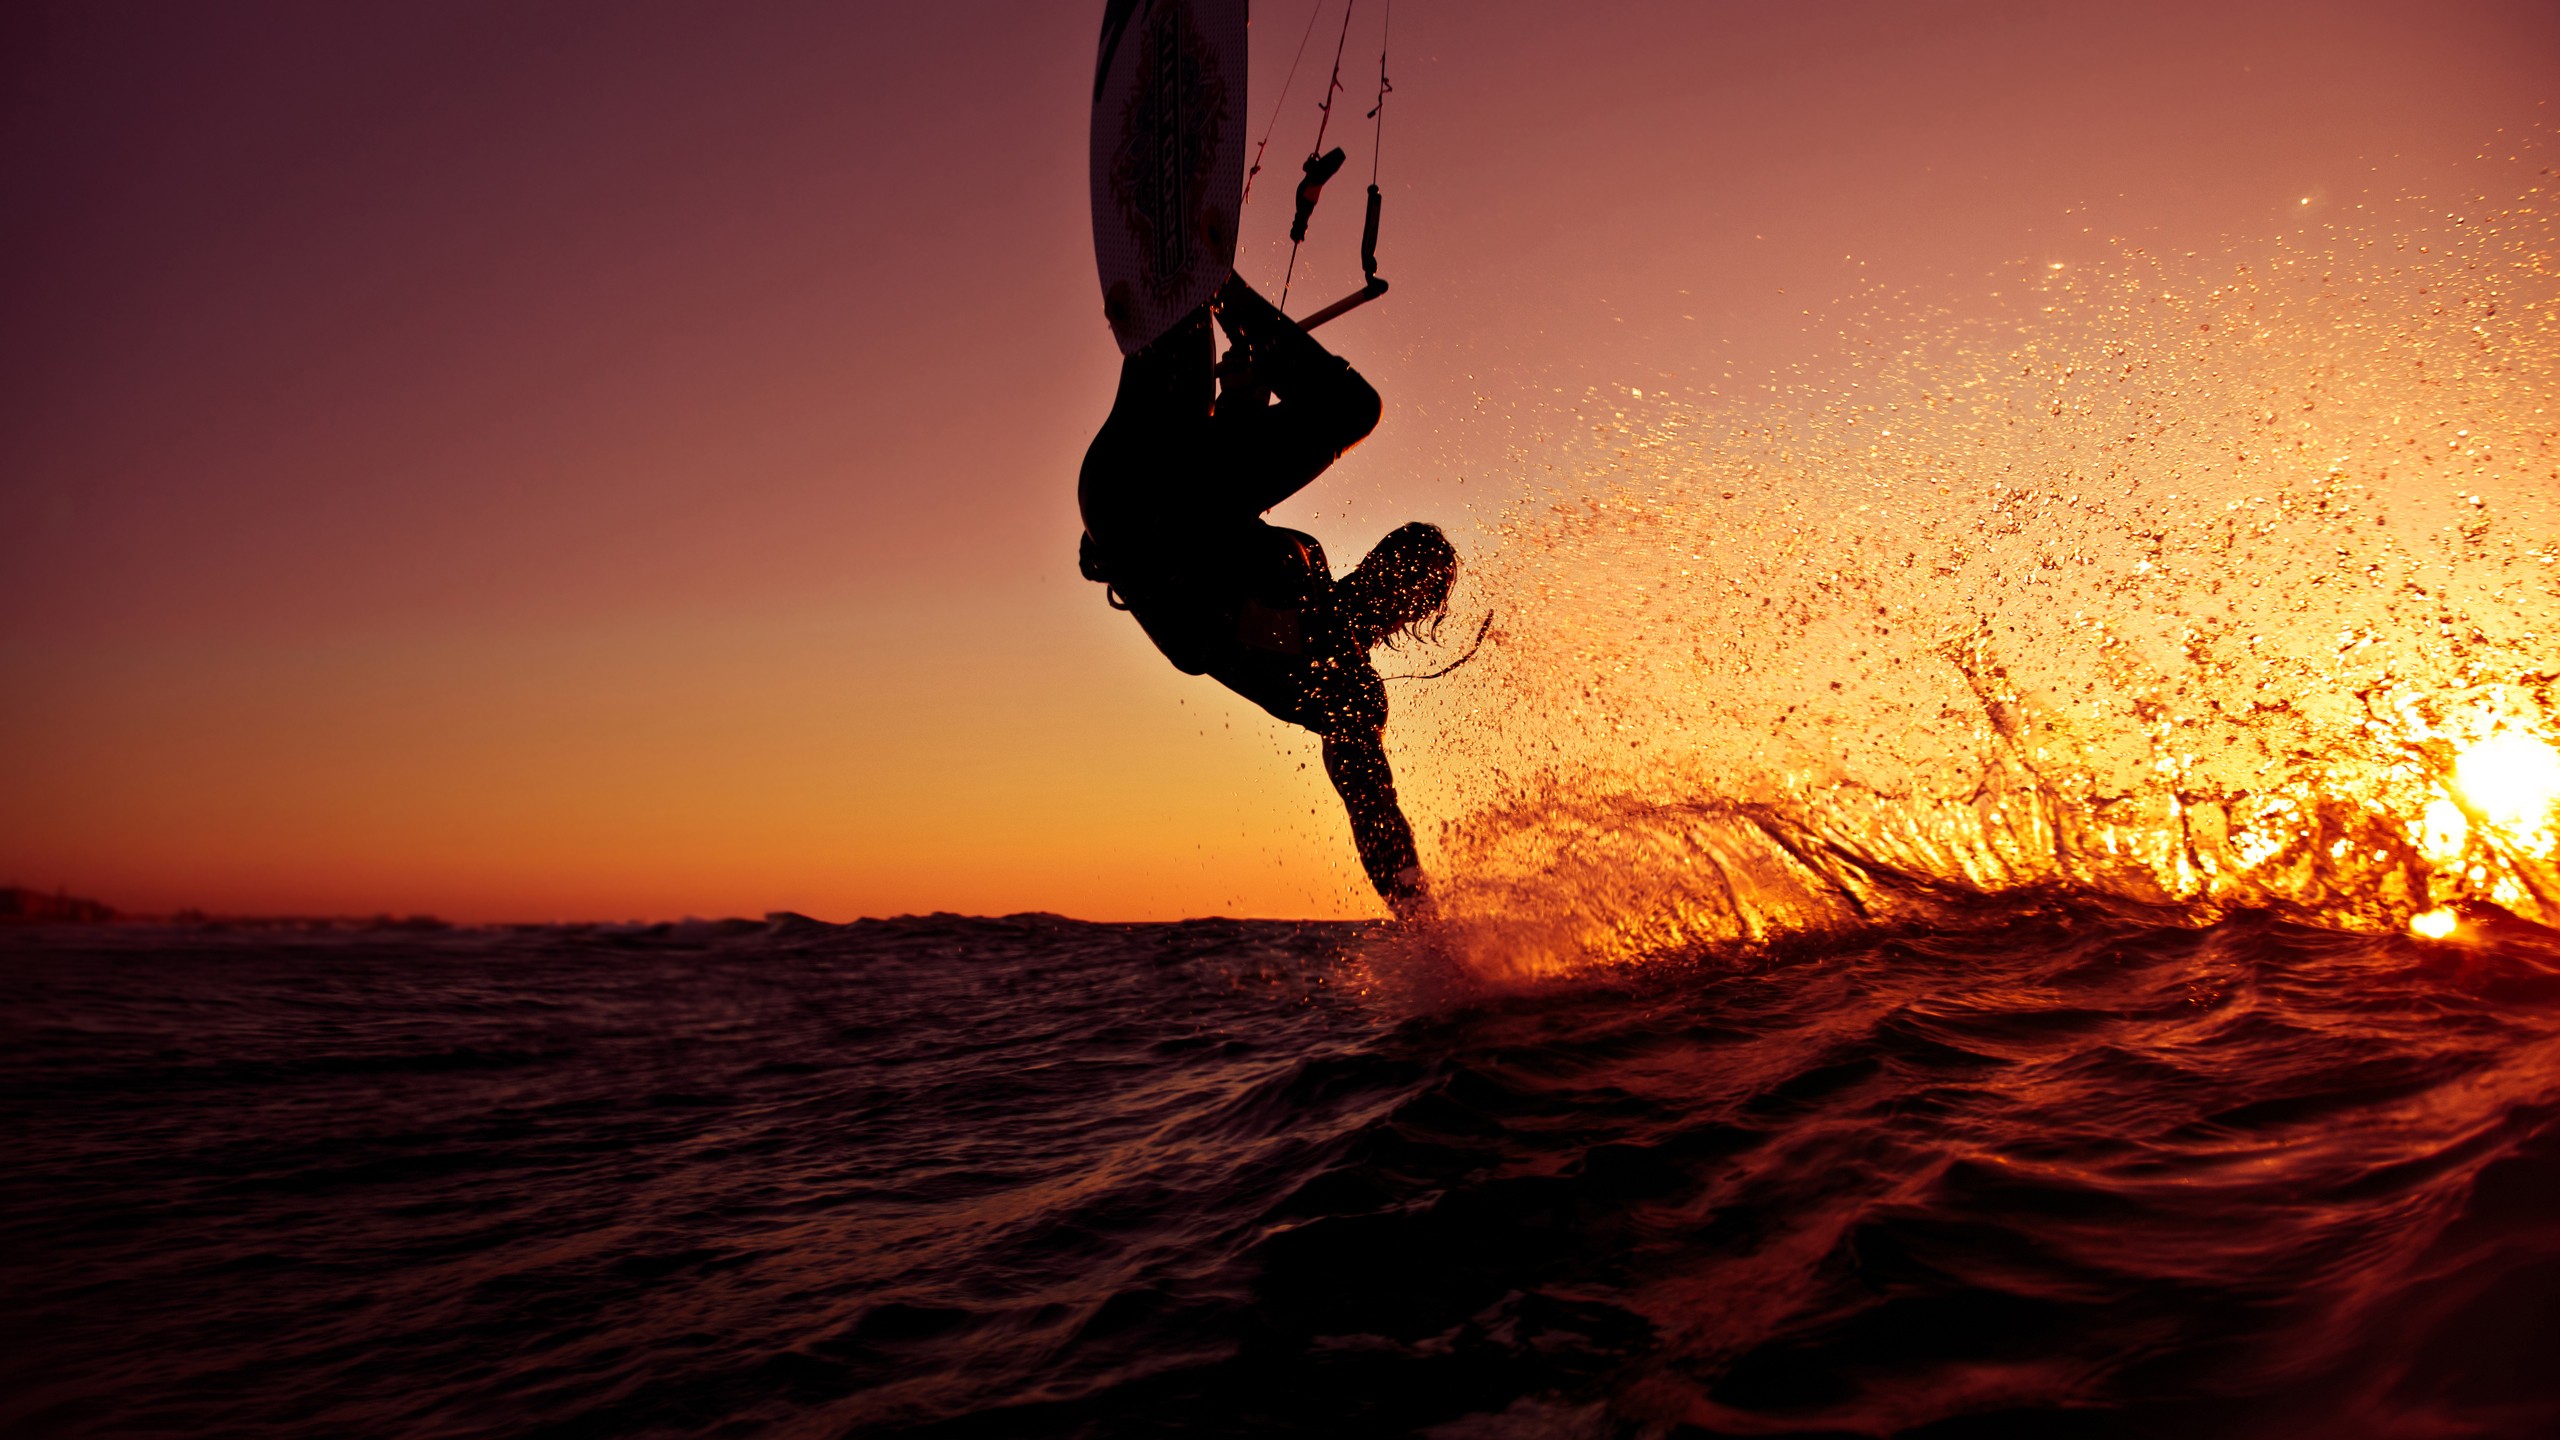 Windsurfing HD Wallpaper | Background Image | 2560x1440 ...